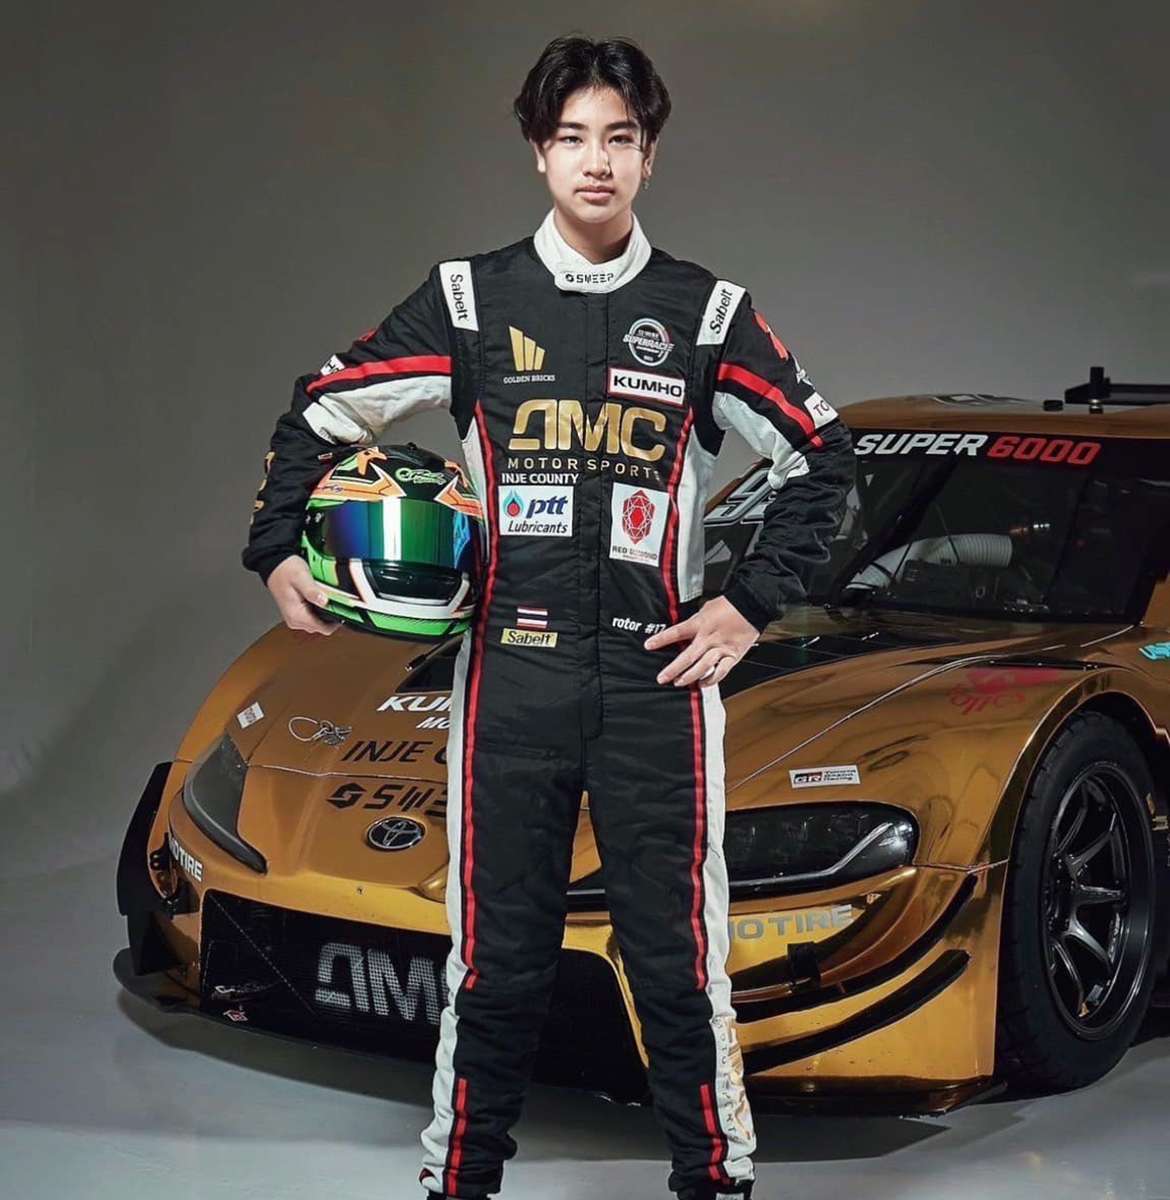 AMC Motorsport ทีมยักษ์ใหญ่เซ็น โรเตอร์-ทองเจือ ลุยมอเตอร์สปอร์ตเกาหลี Super Race 2024, AMC Motorsport ทีมยักษ์ใหญ่เซ็น โรเตอร์-ทองเจือ ลุยมอเตอร์สปอร์ตเกาหลี Super Race 2024